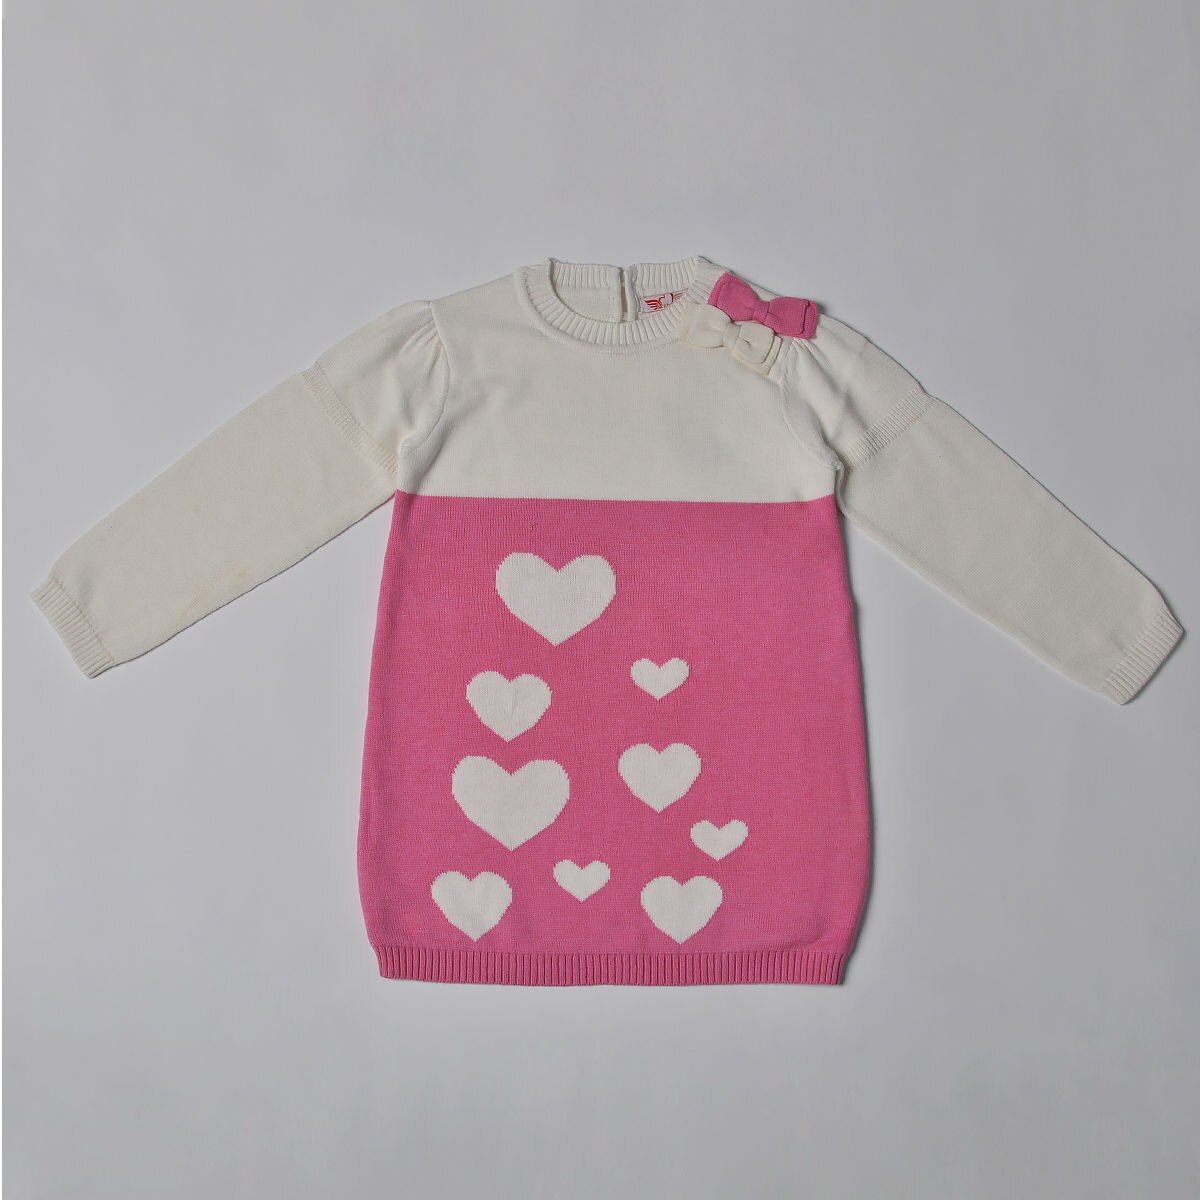 Платье детское Cherubino 6W102 CB, розовый, 68 боди детское cherubino cwb 4185 бирюзовый 80